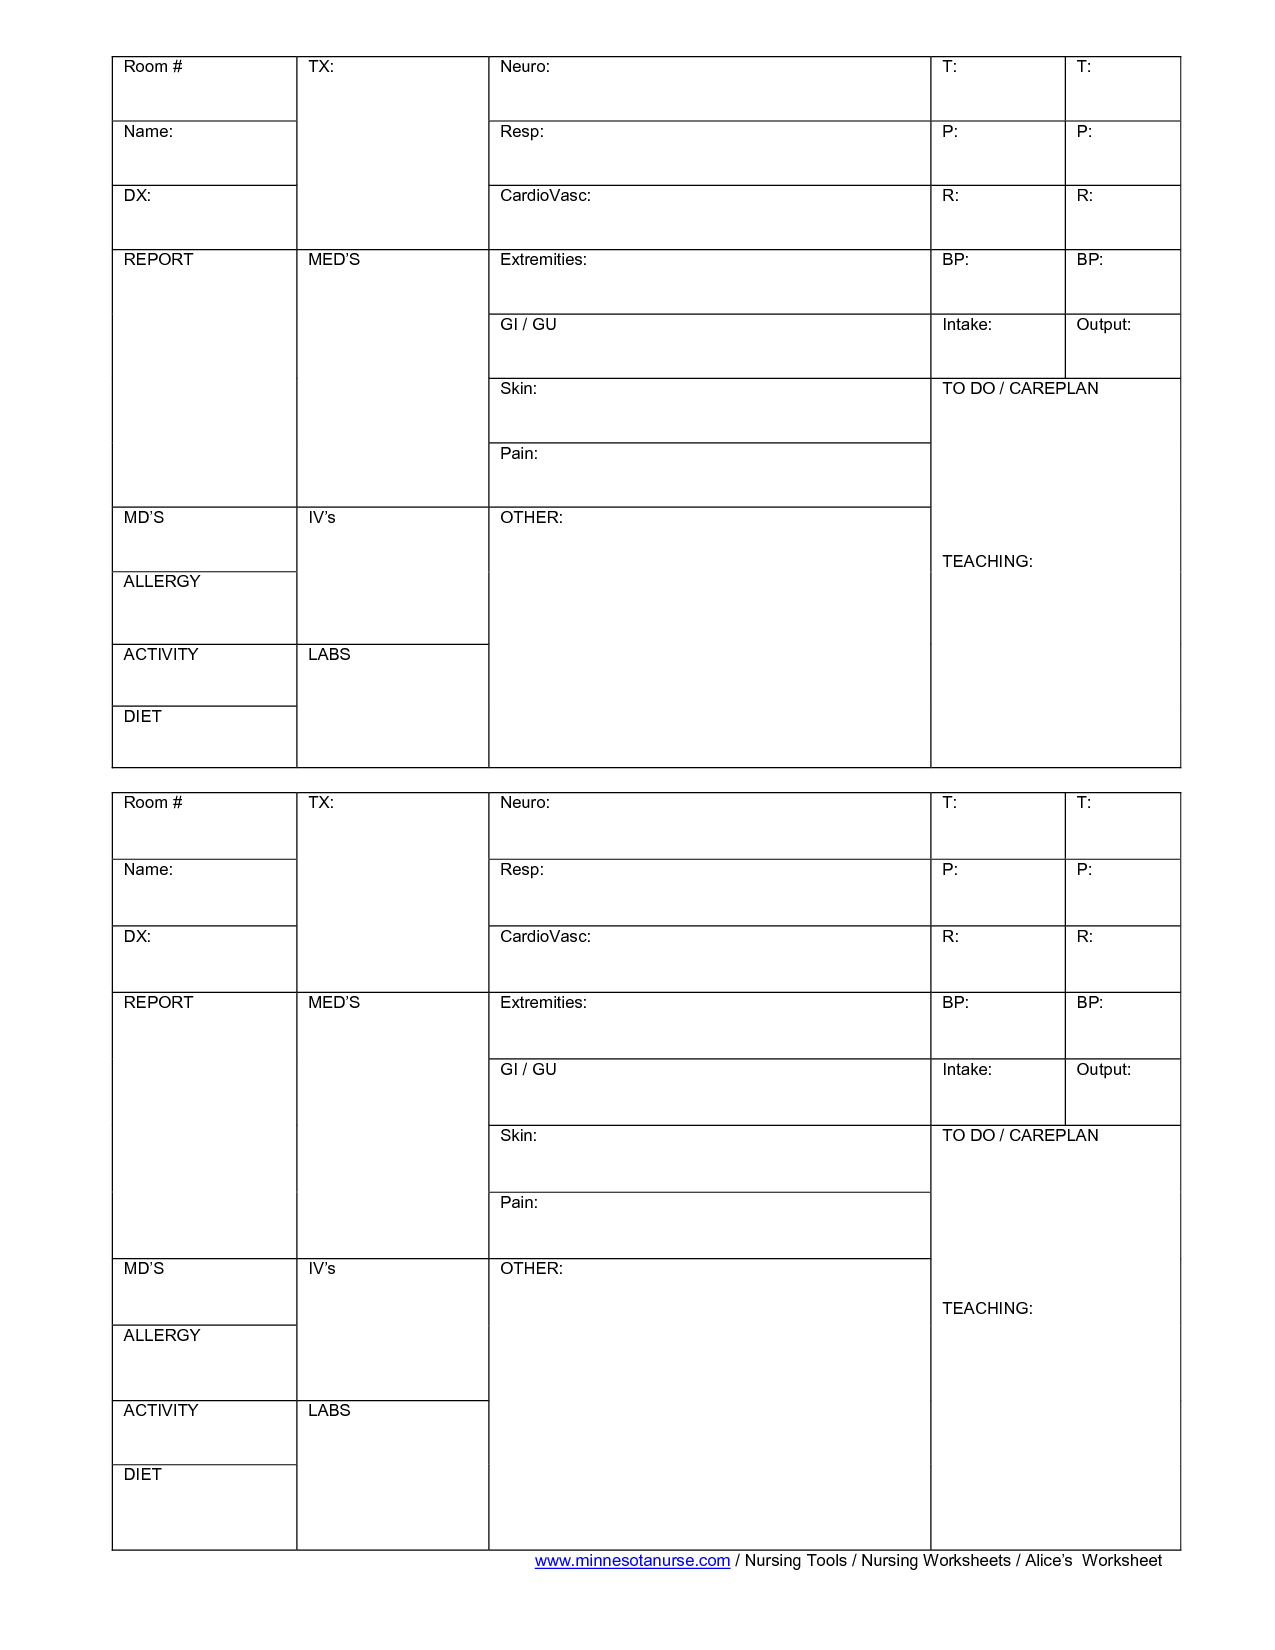 Blank Nursing Report Sheets For Newborns | Nursing Patient In Nursing Report Sheet Templates